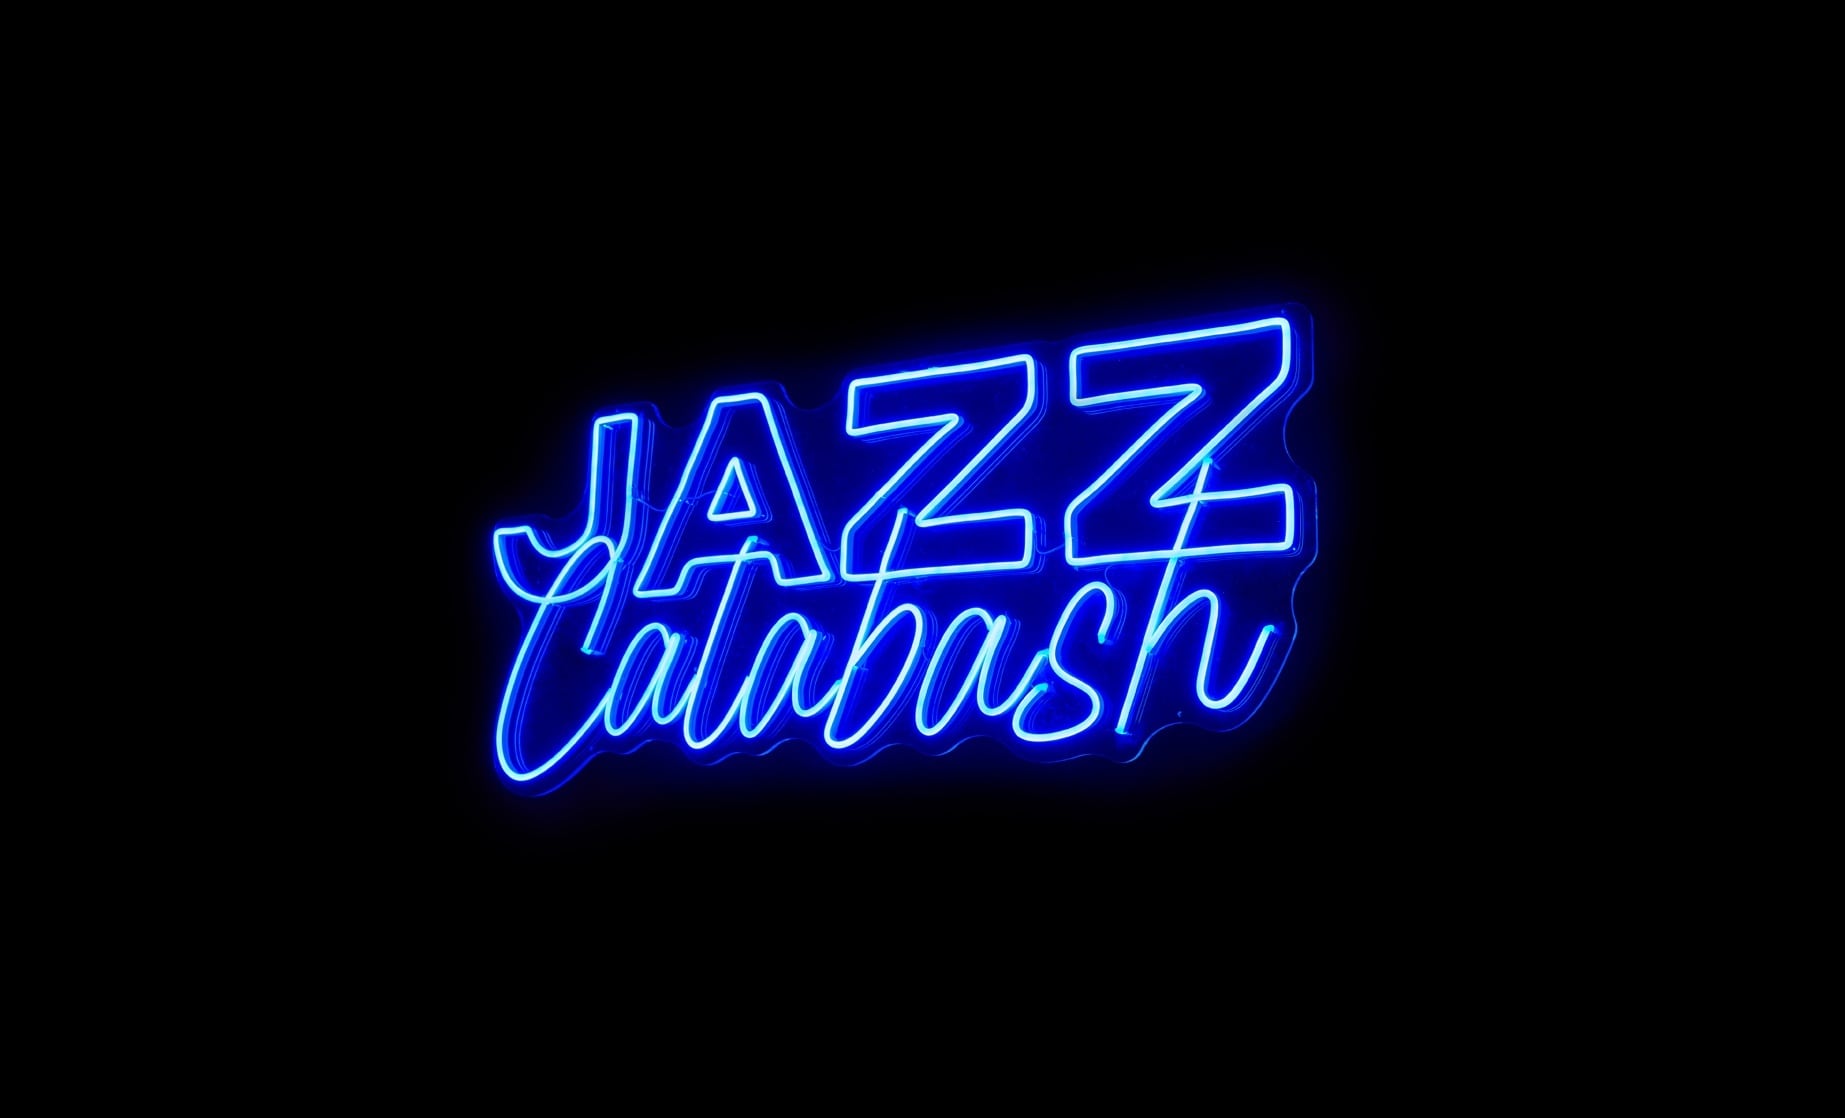 Jazzcalabash